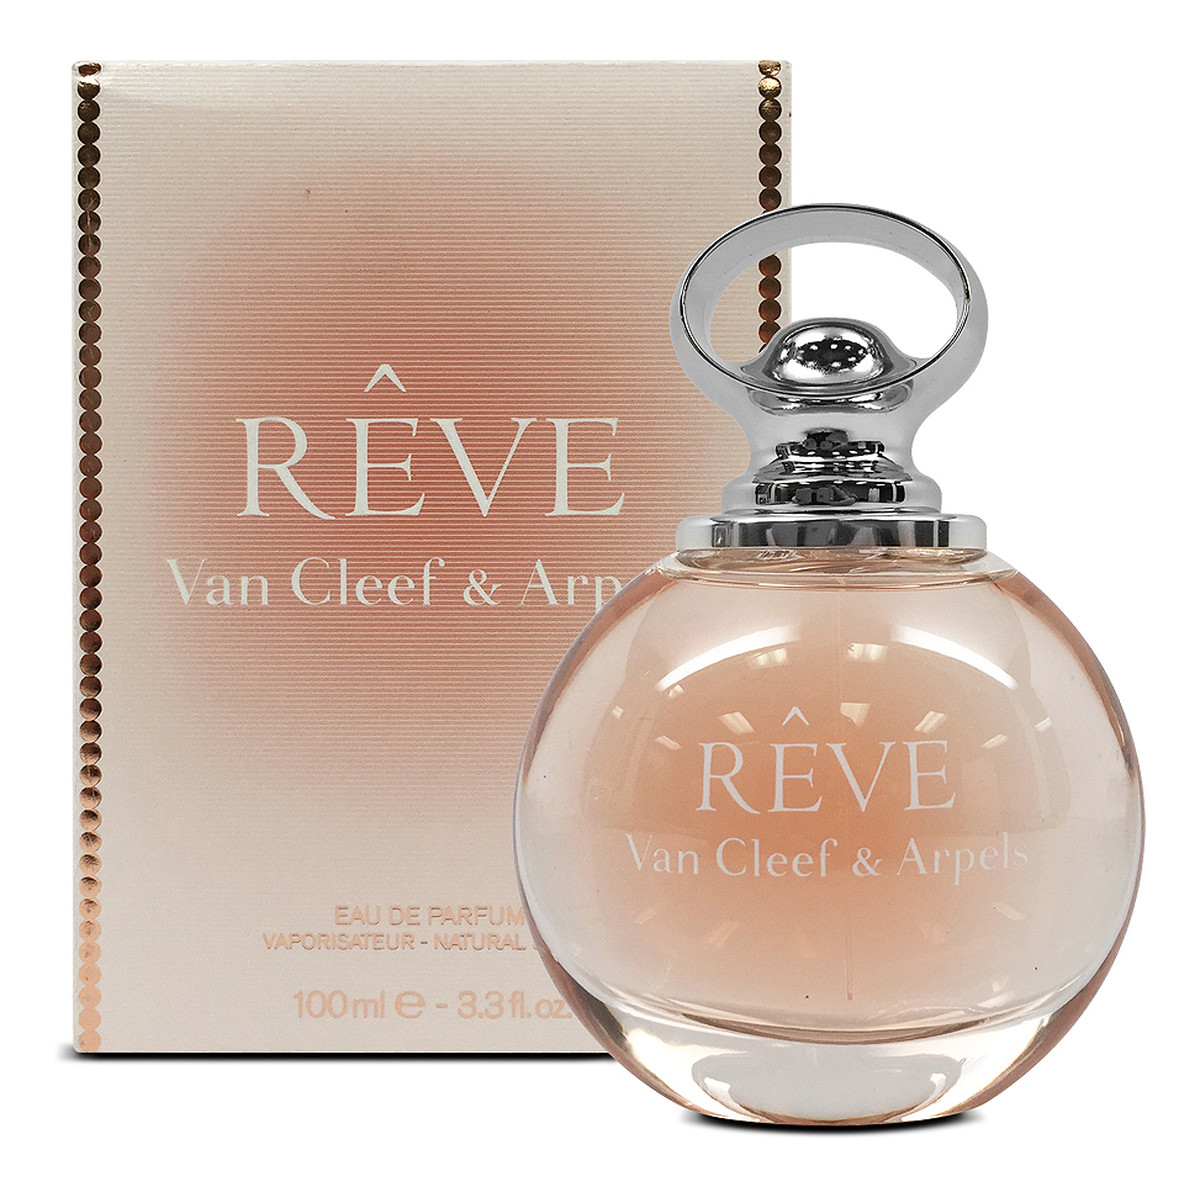 Van Cleef & Arpels Reve woda perfumowana 100ml